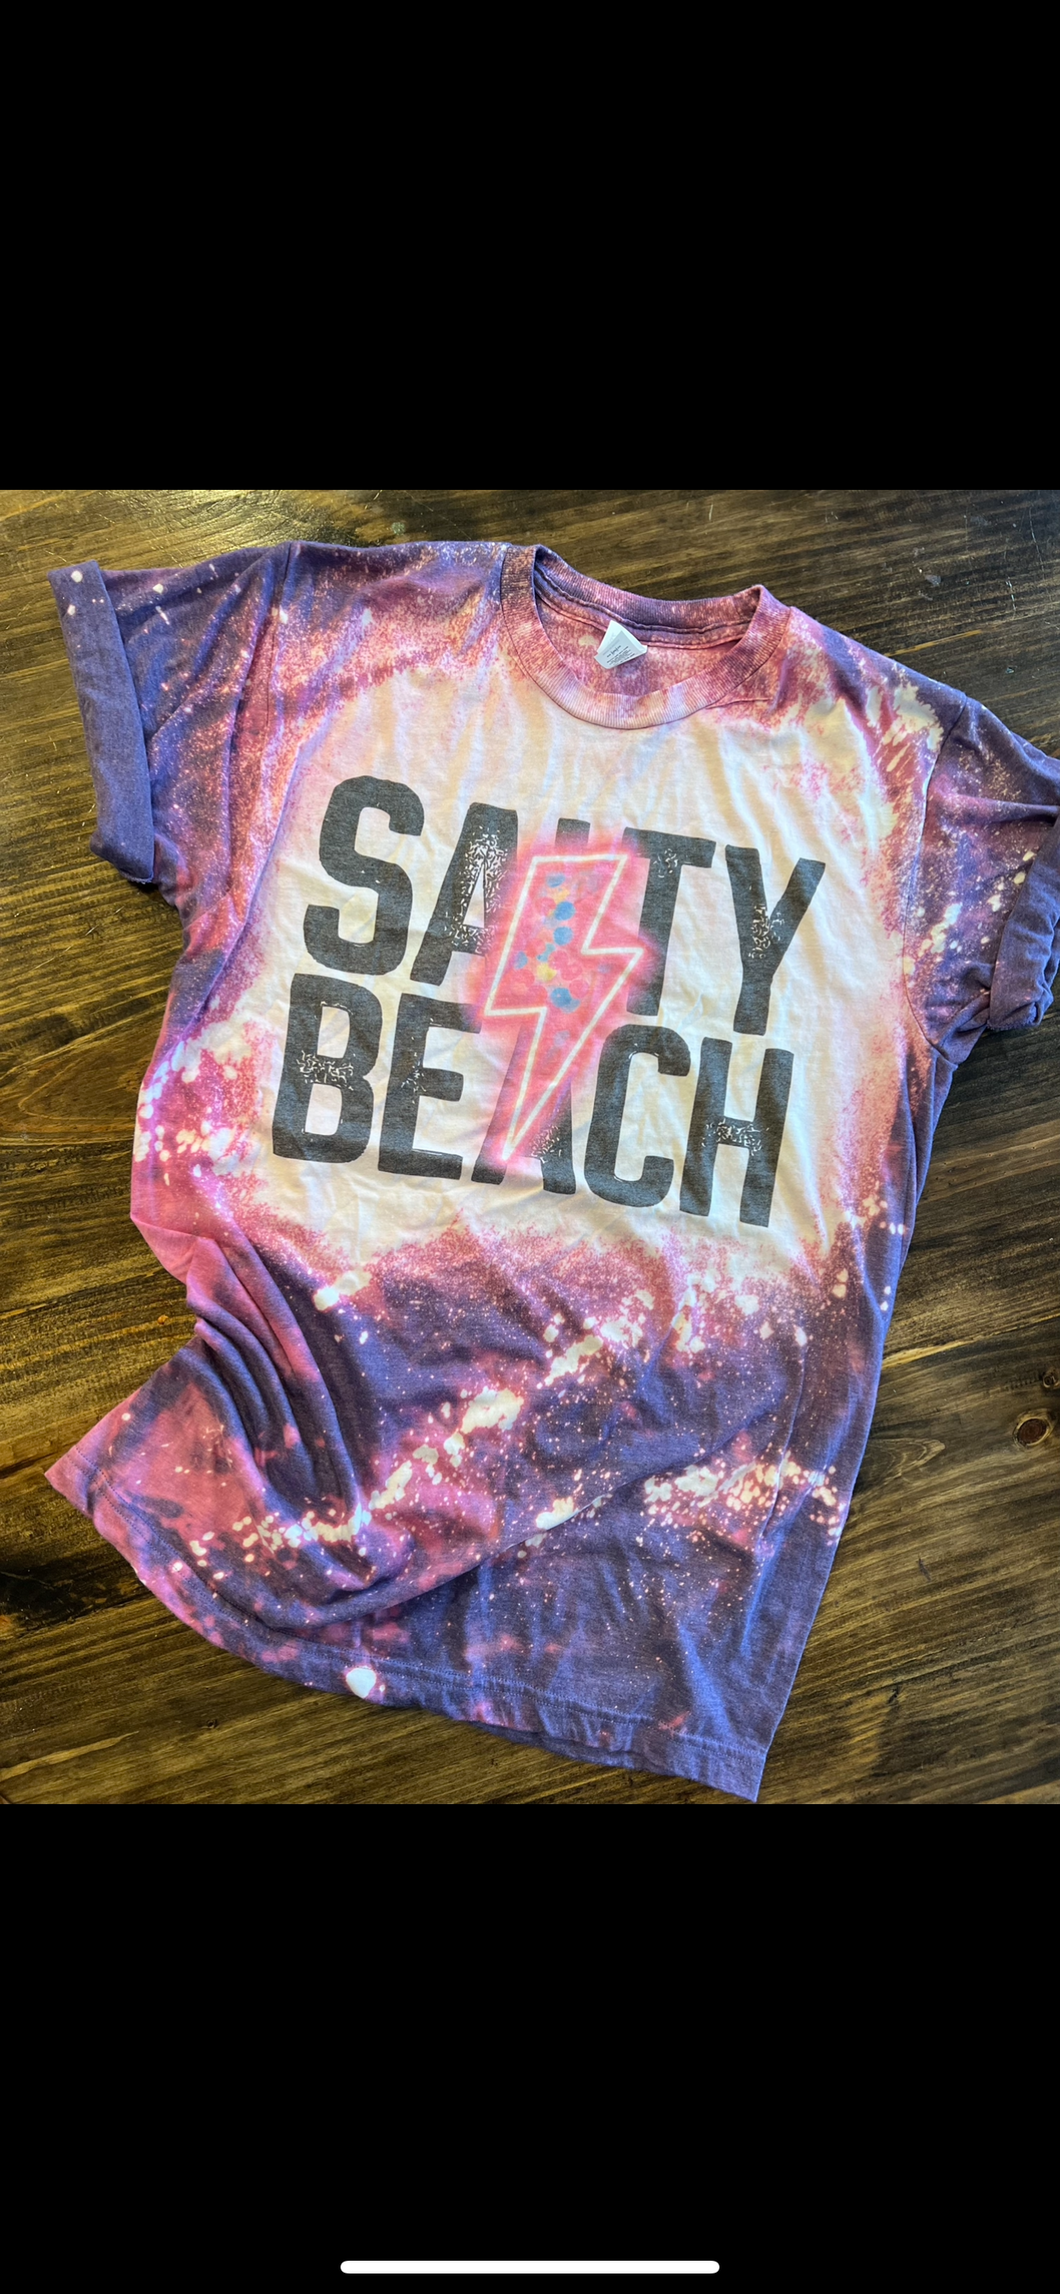 Salty Beach - Mavictoria Designs Hot Press Express